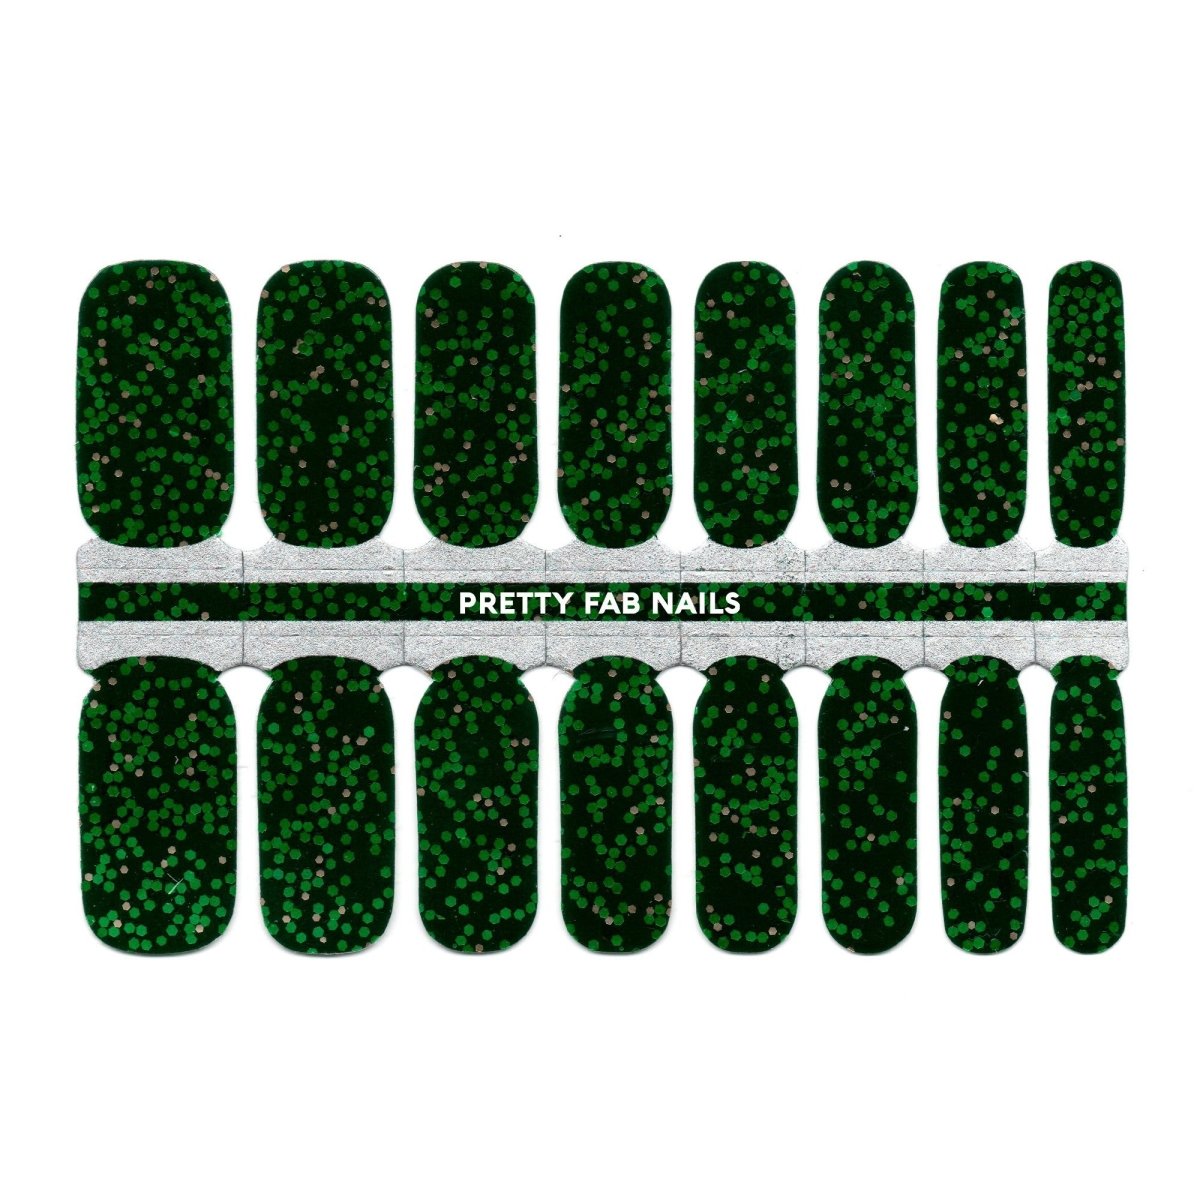 Emerald City Glitter Nail Polish Wraps - Nail Polish Wraps - Pretty Fab Nails - Pretty Fab Nails